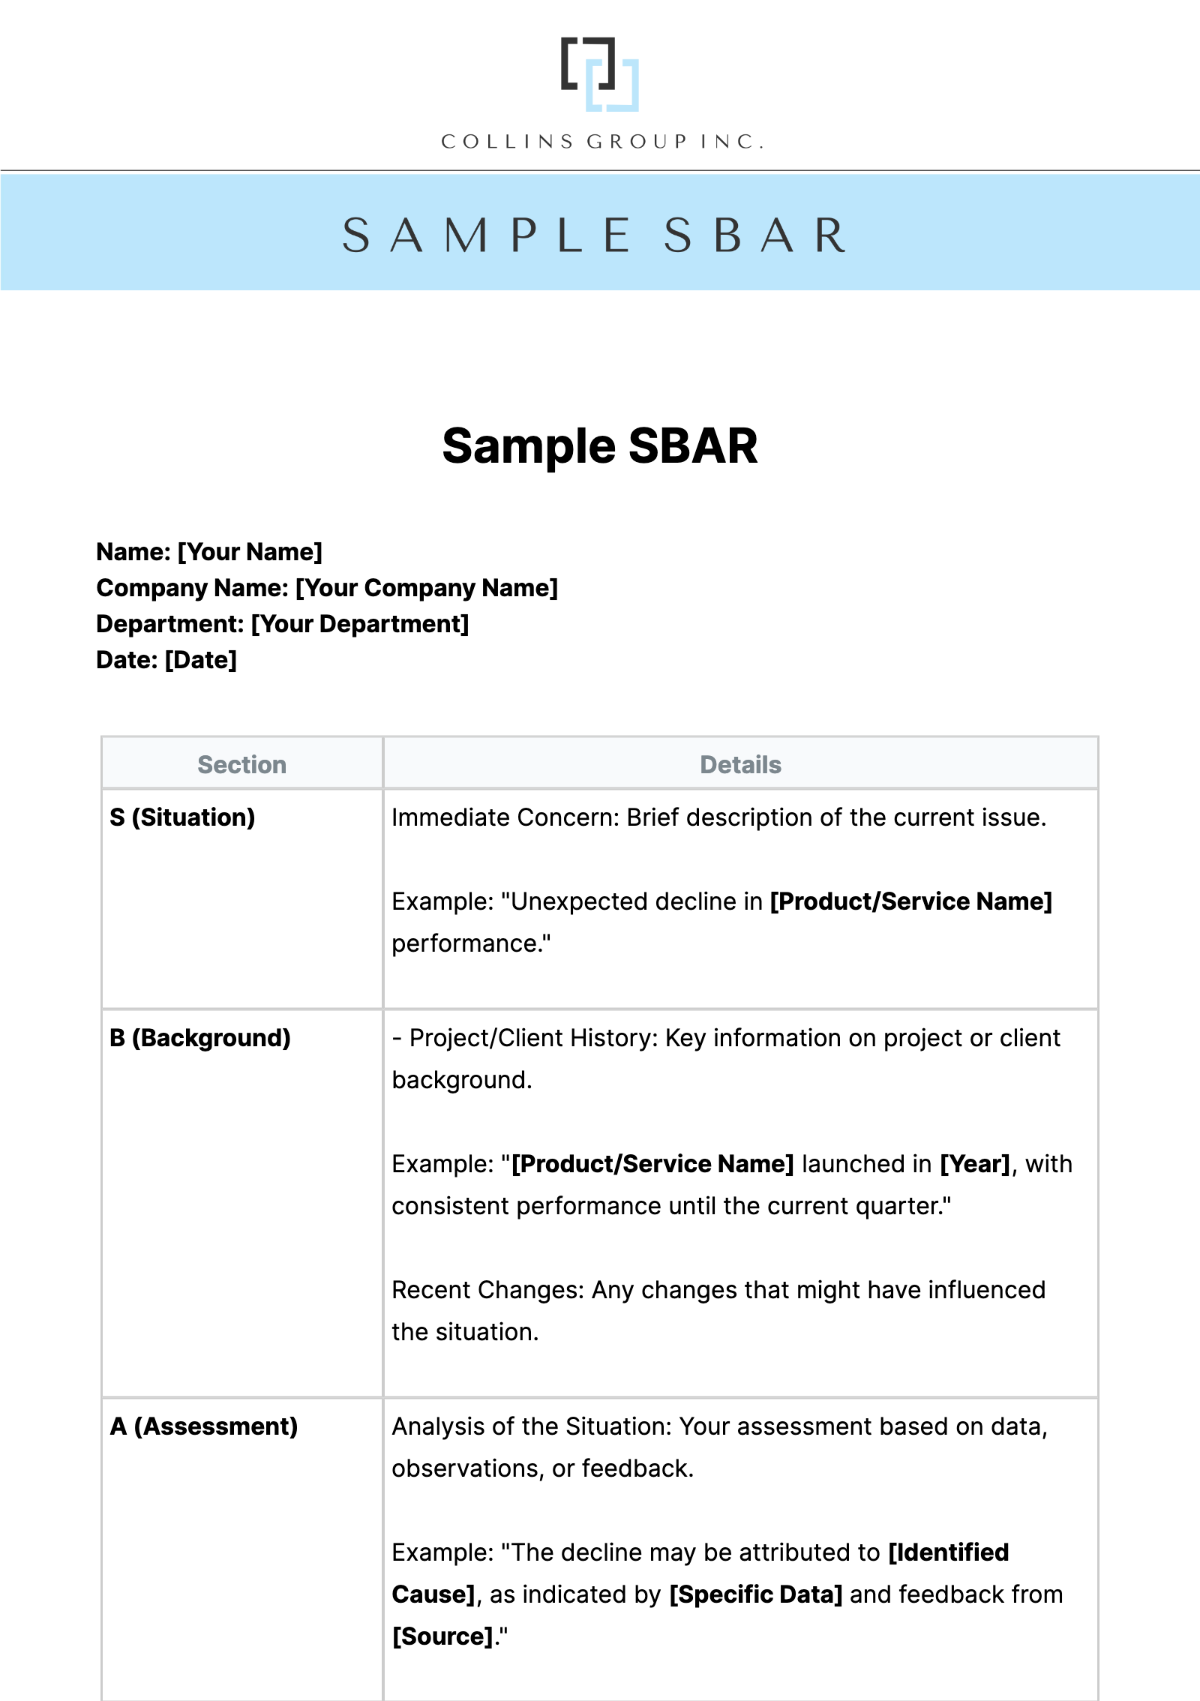 Sample SBAR Template